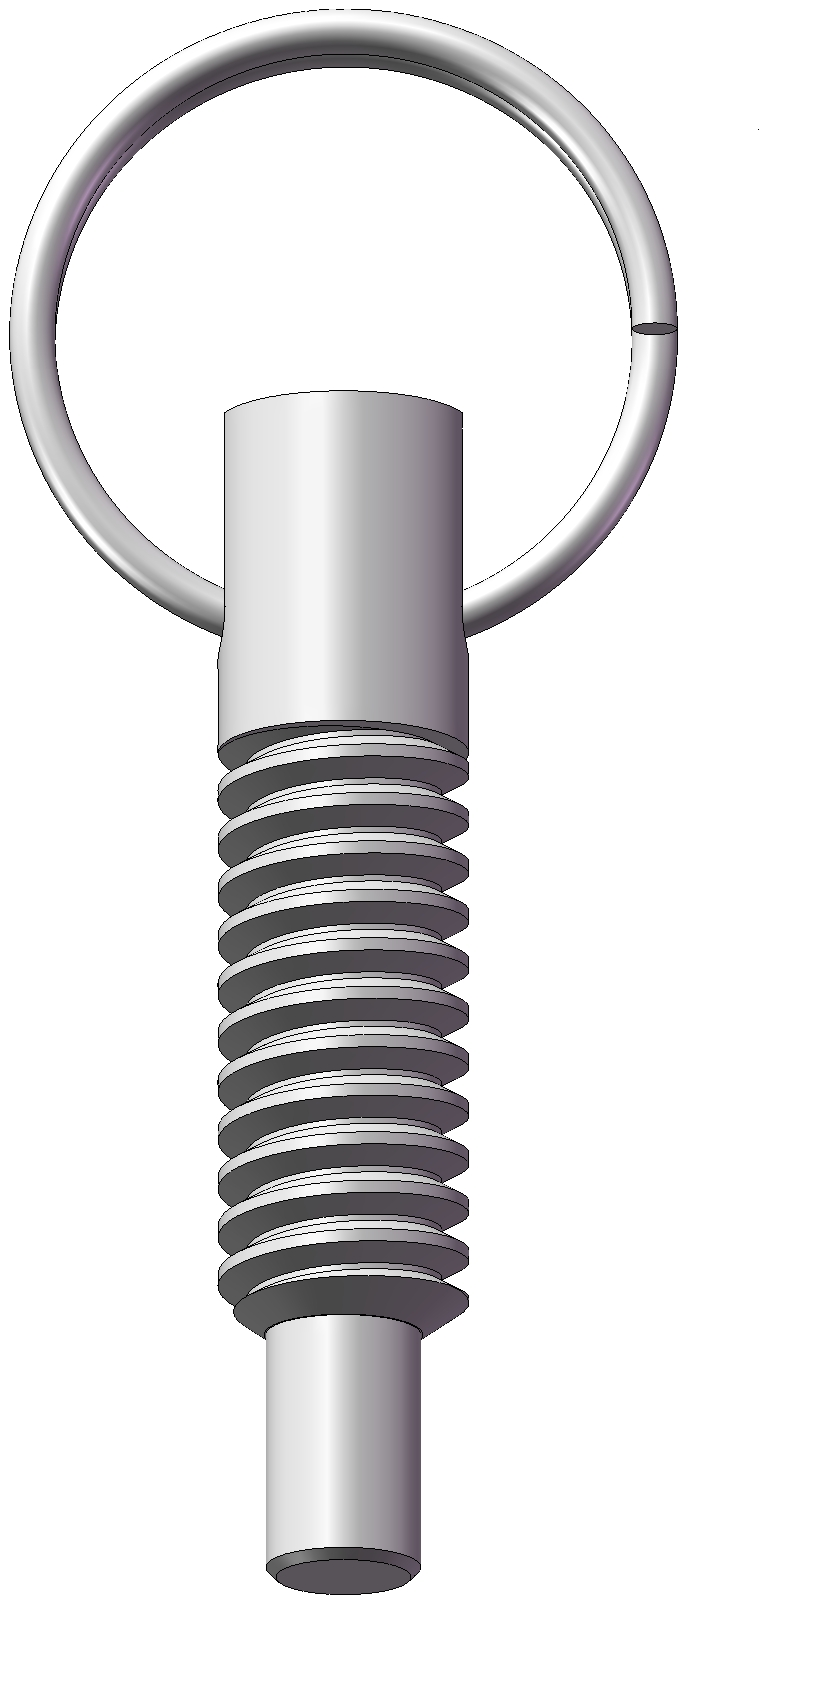 Steel Zinc Innovative Components AP1CSR21 Short Pull Ring Plunger Pin 5/8-11 x .38 Dia Pin 